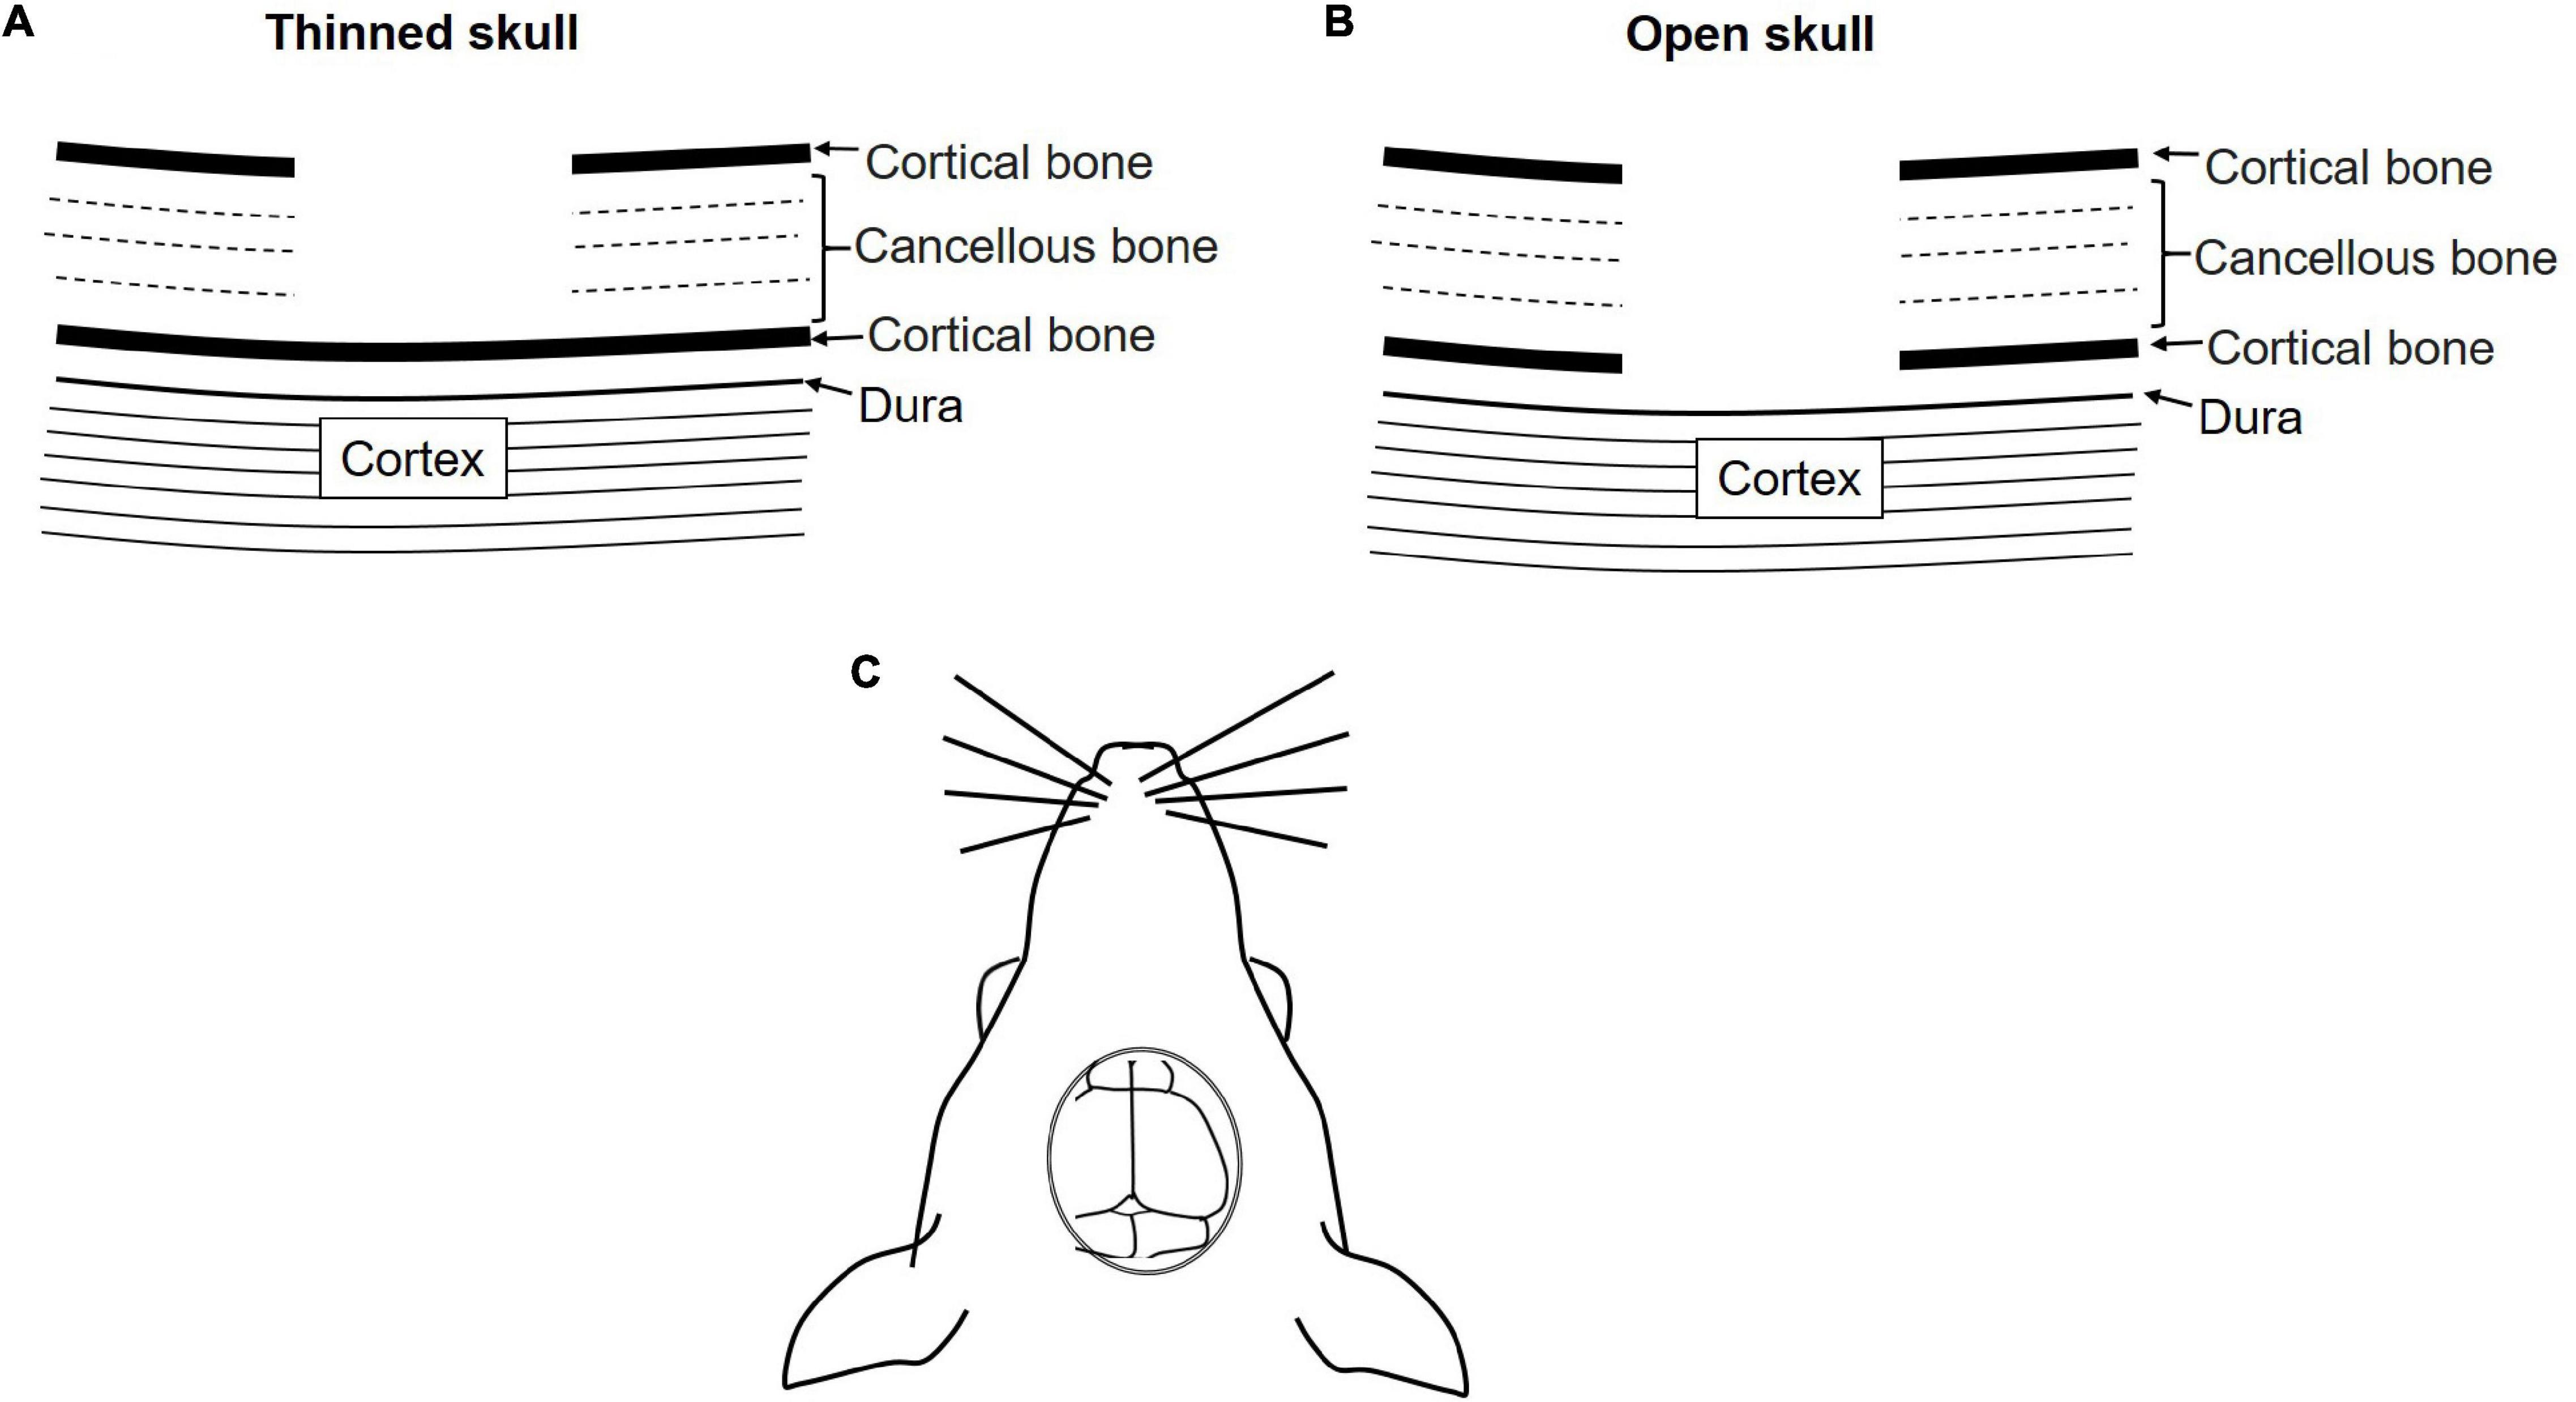 Minimally invasive longitudinal intravital imaging of cellular dynamics in  intact long bone